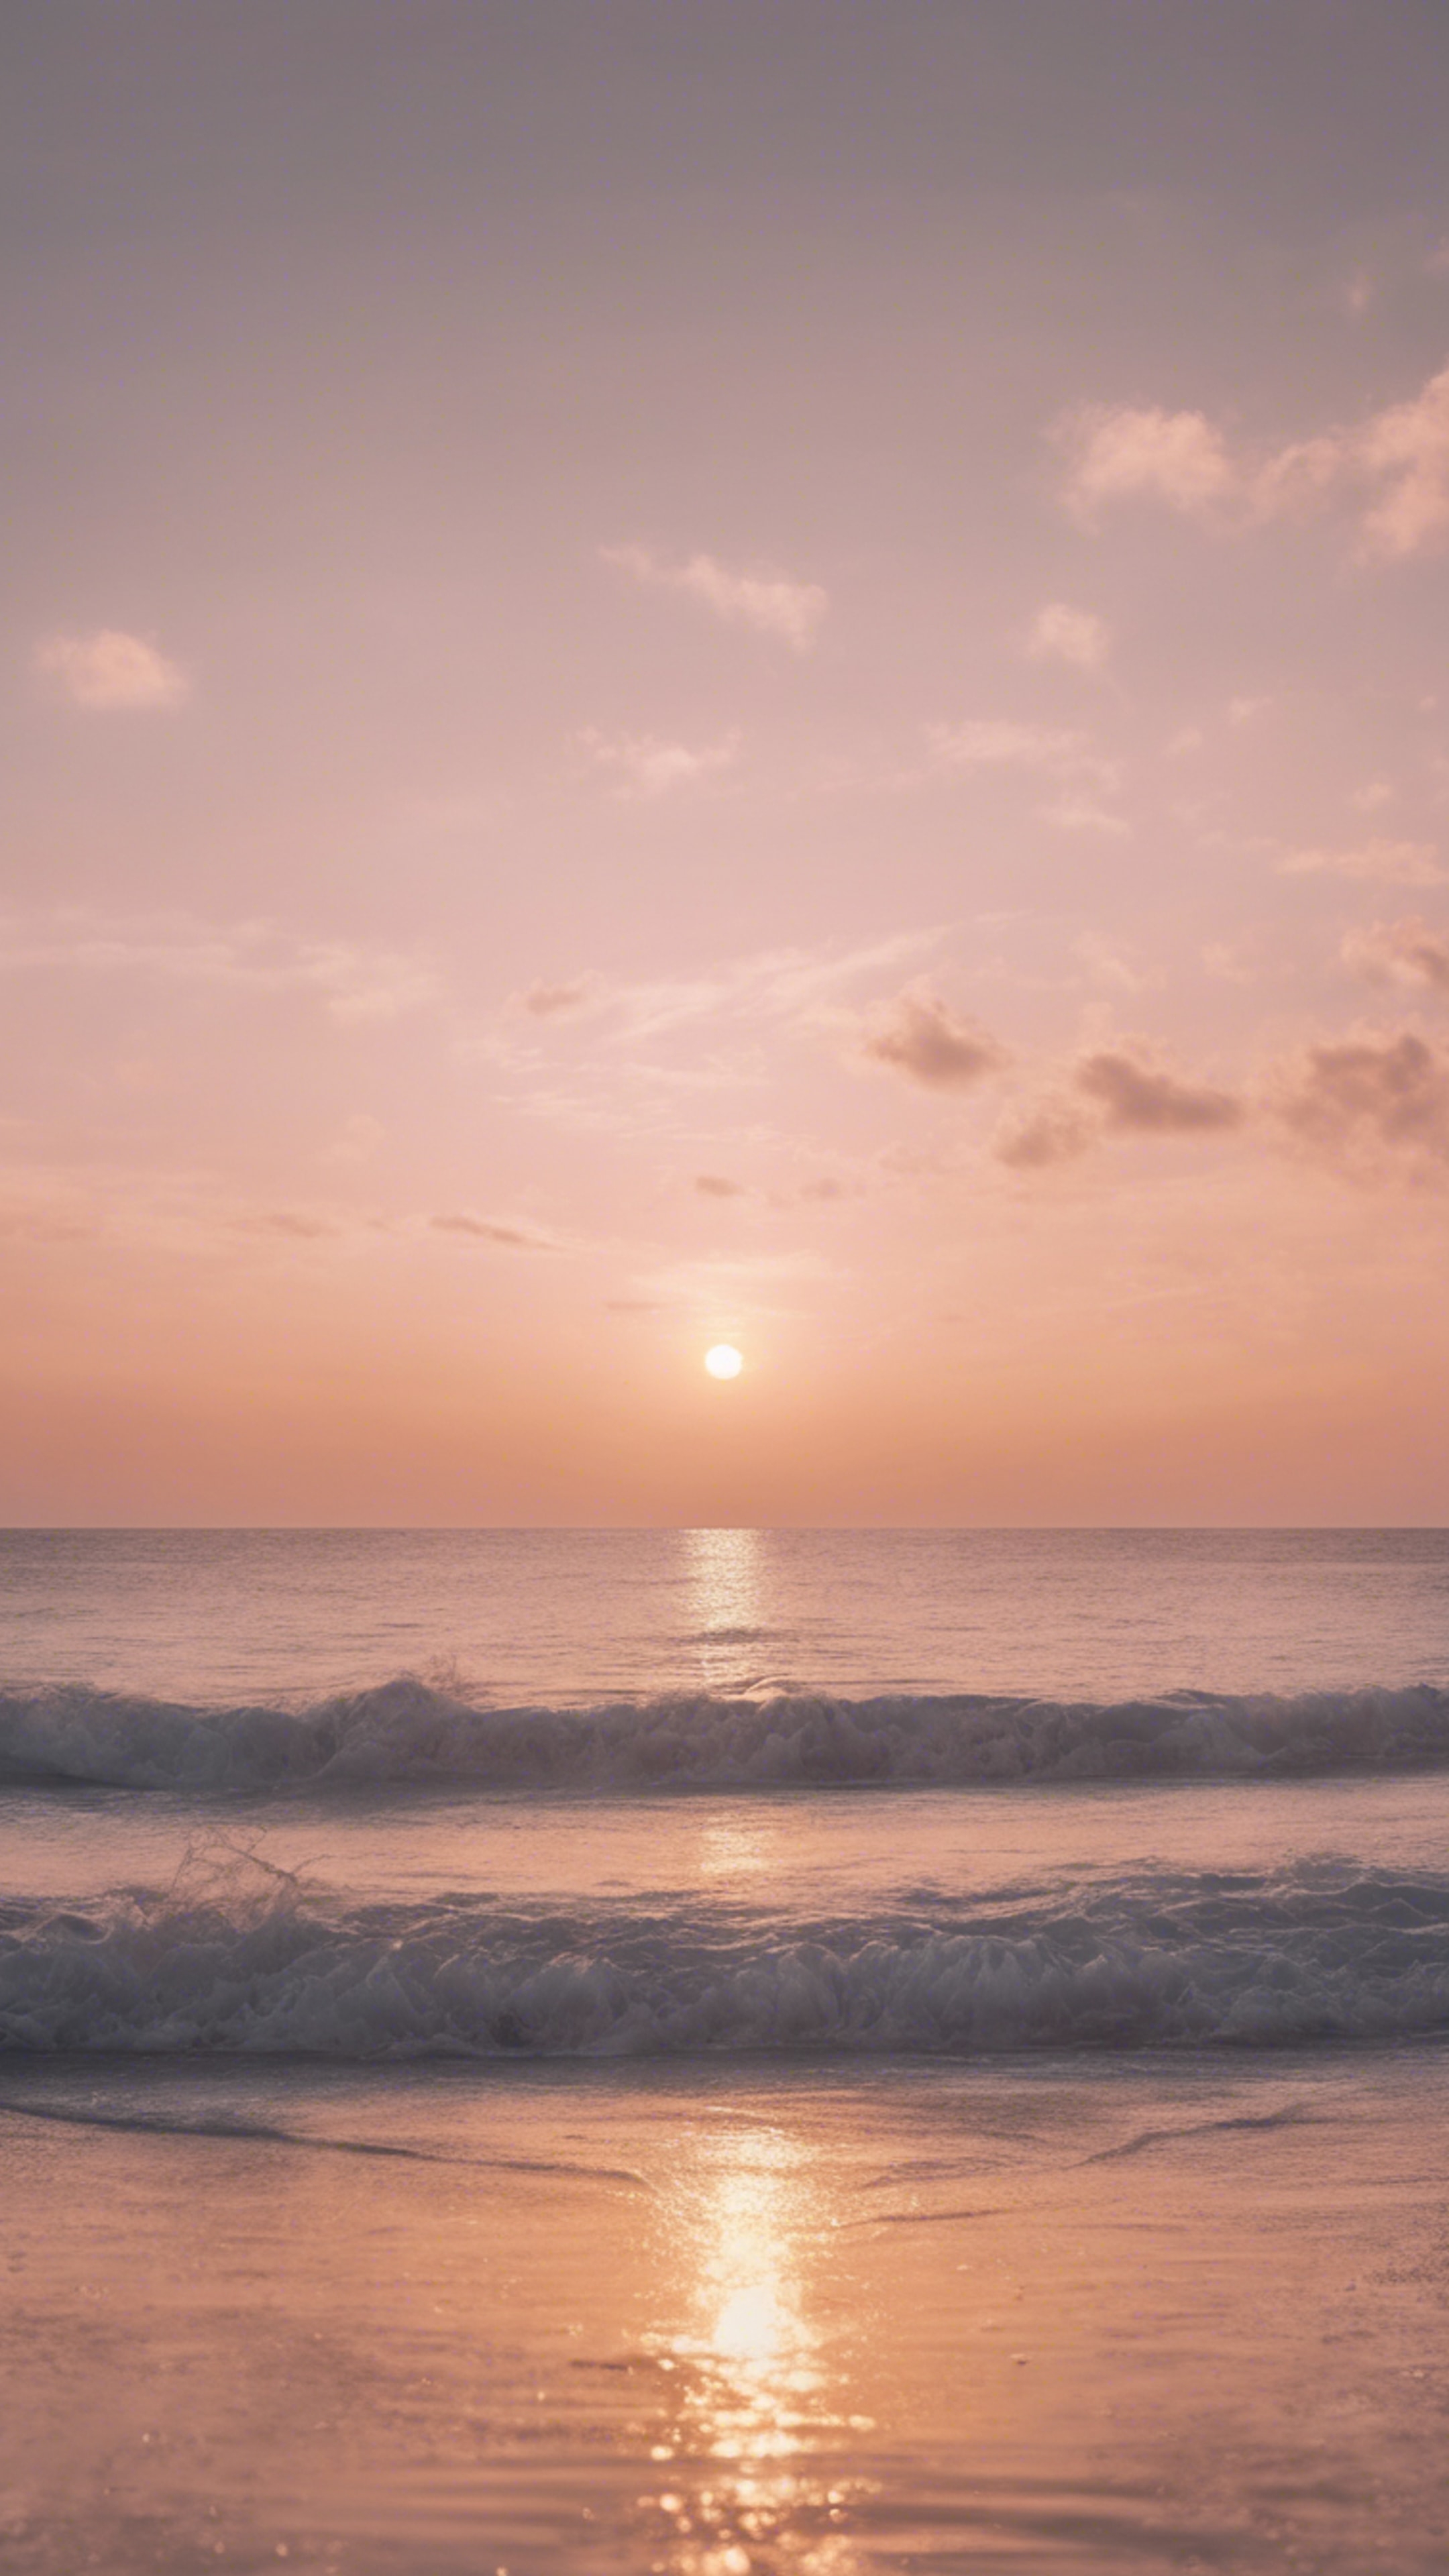 A sun setting in a cool pastel colored sky over a peaceful beach.壁紙[a65e0818d39e414c96e7]